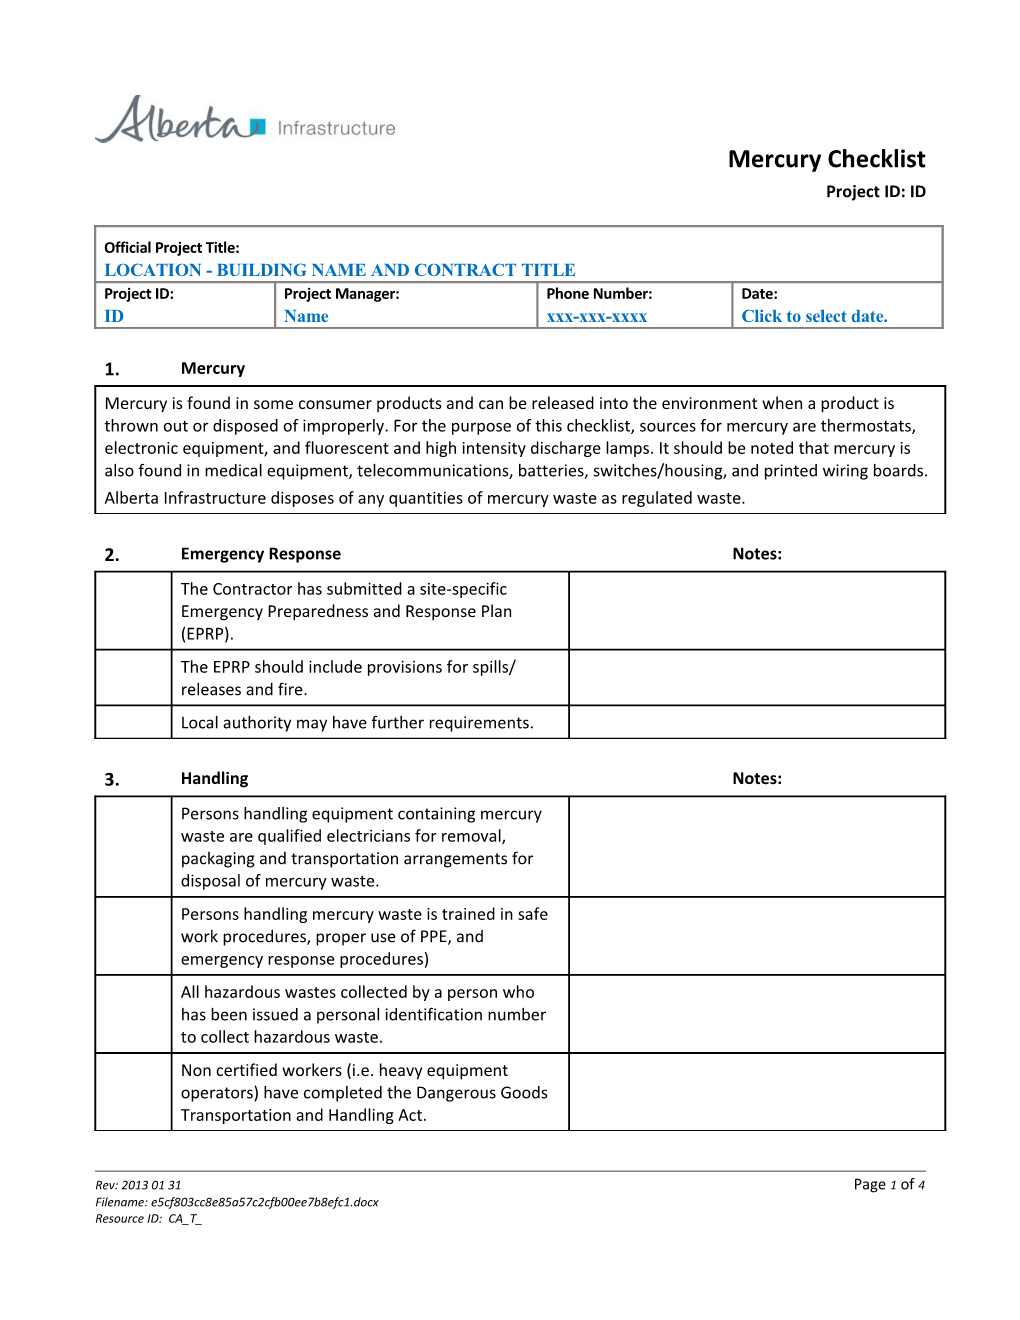 EMS Mercury Checklist Template